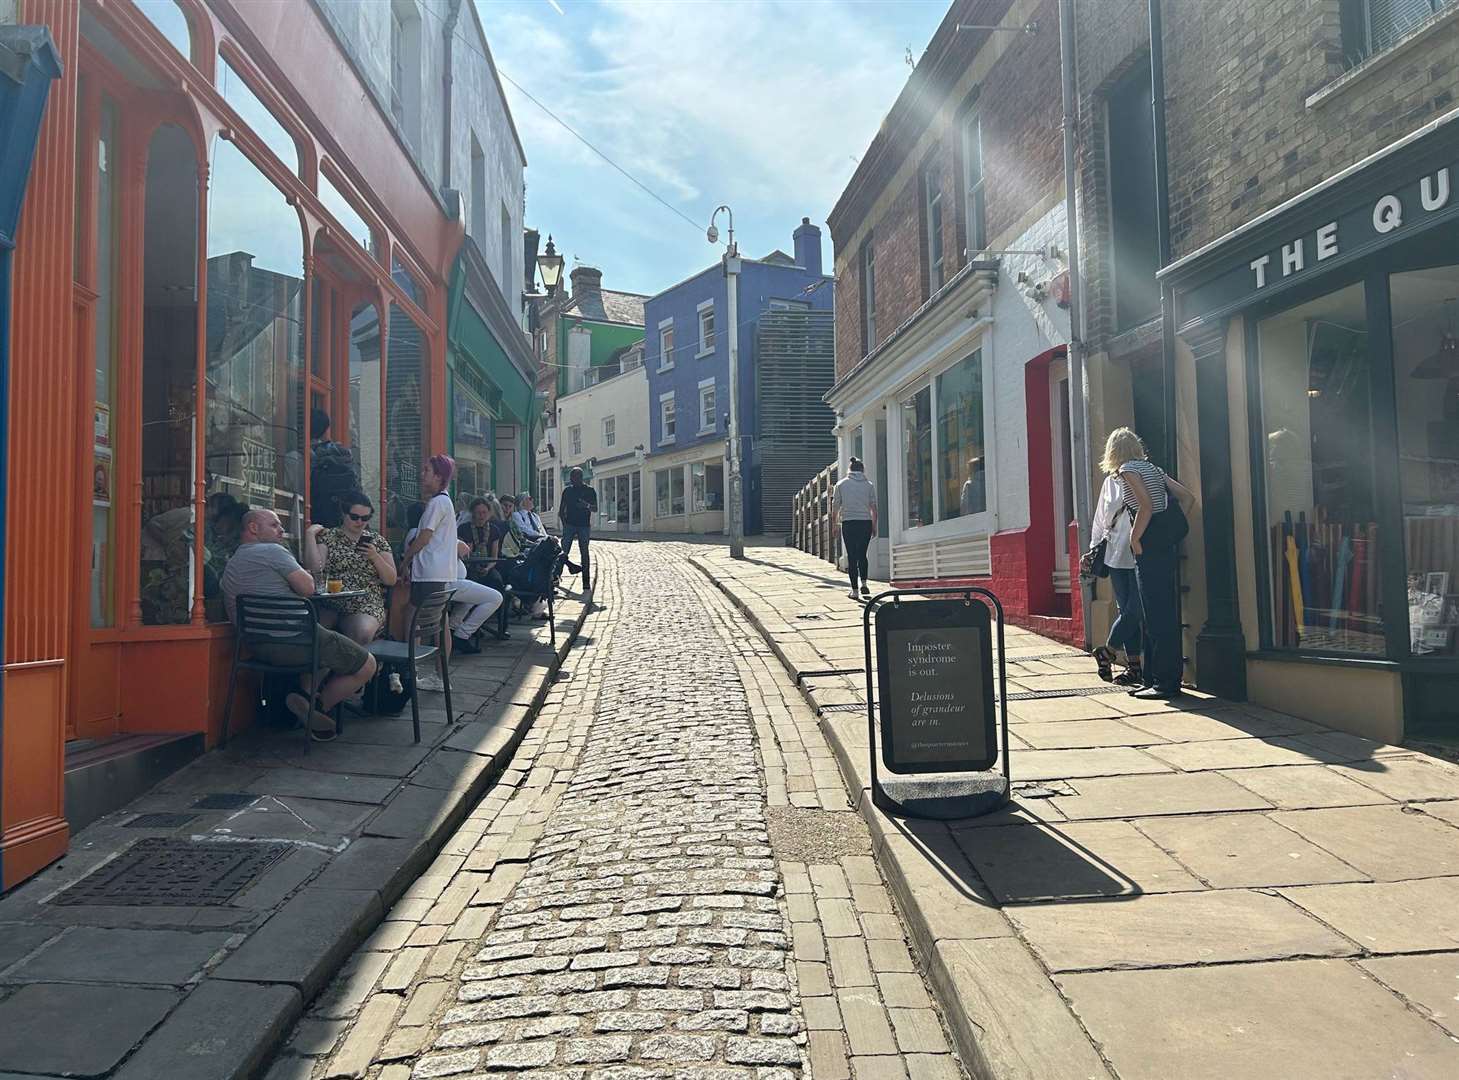 The rejuvenated Old High Street in Folkestone